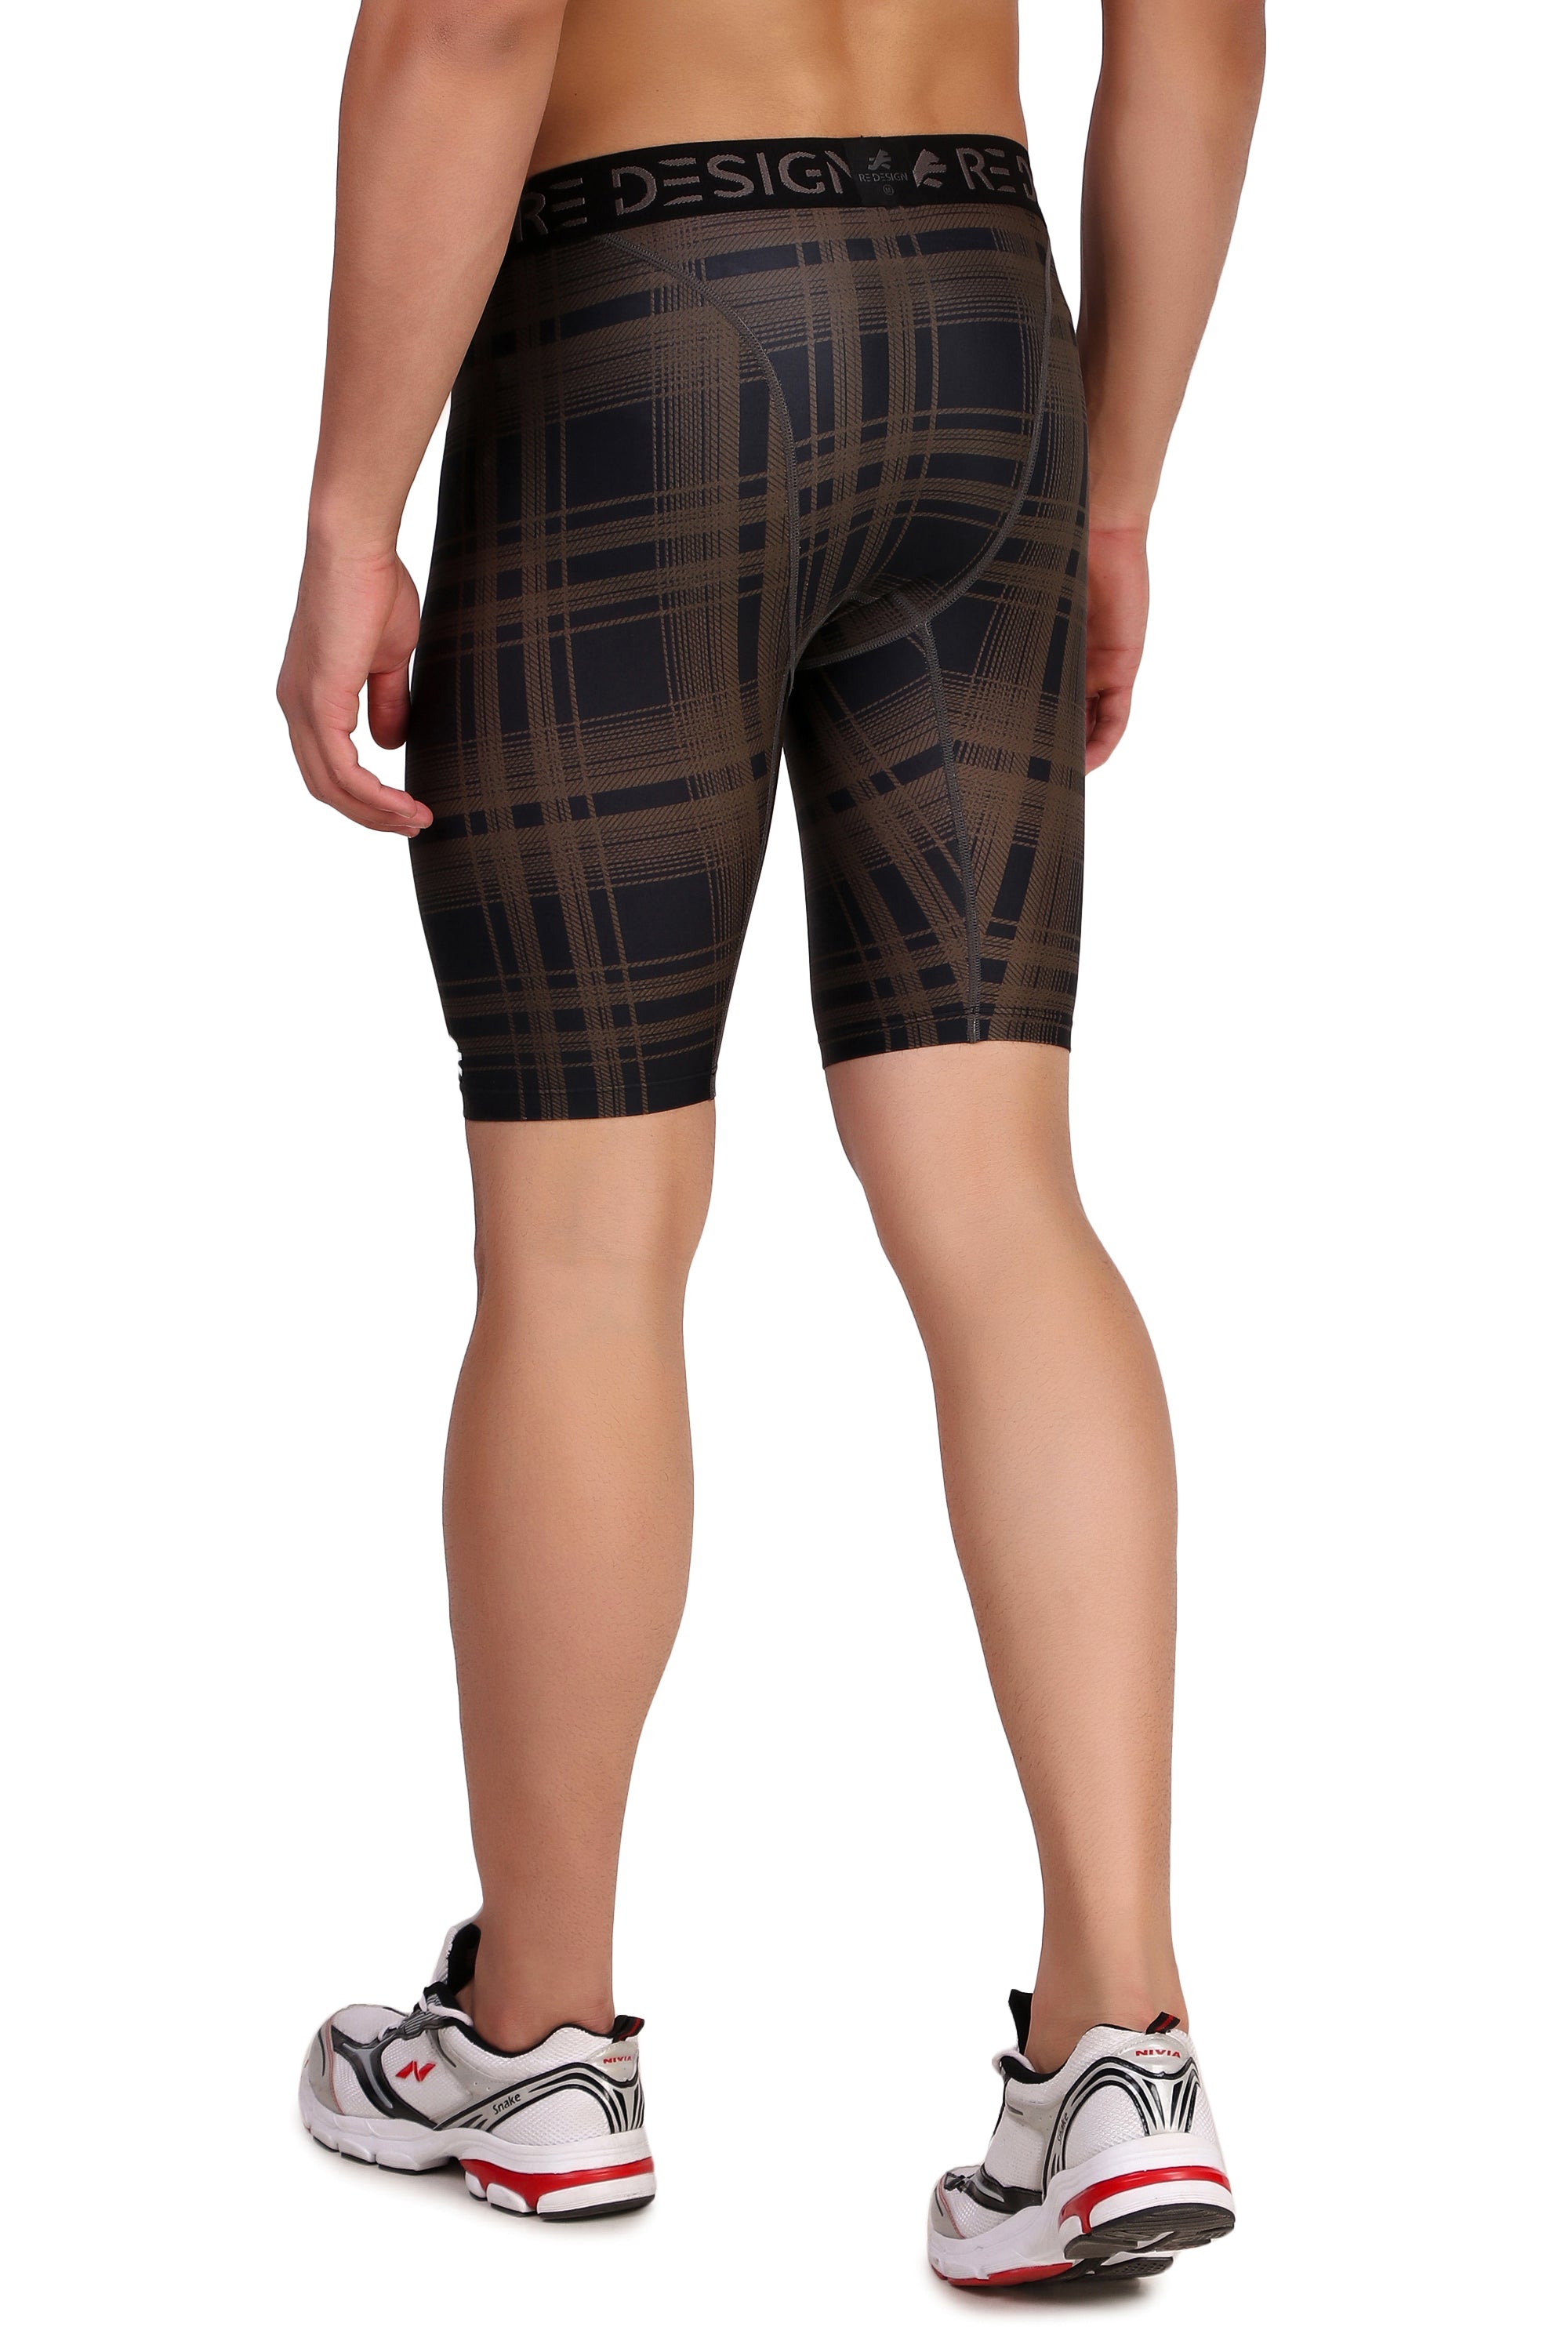 Men's Nylon Compression Shorts and Half Tights (Plade)